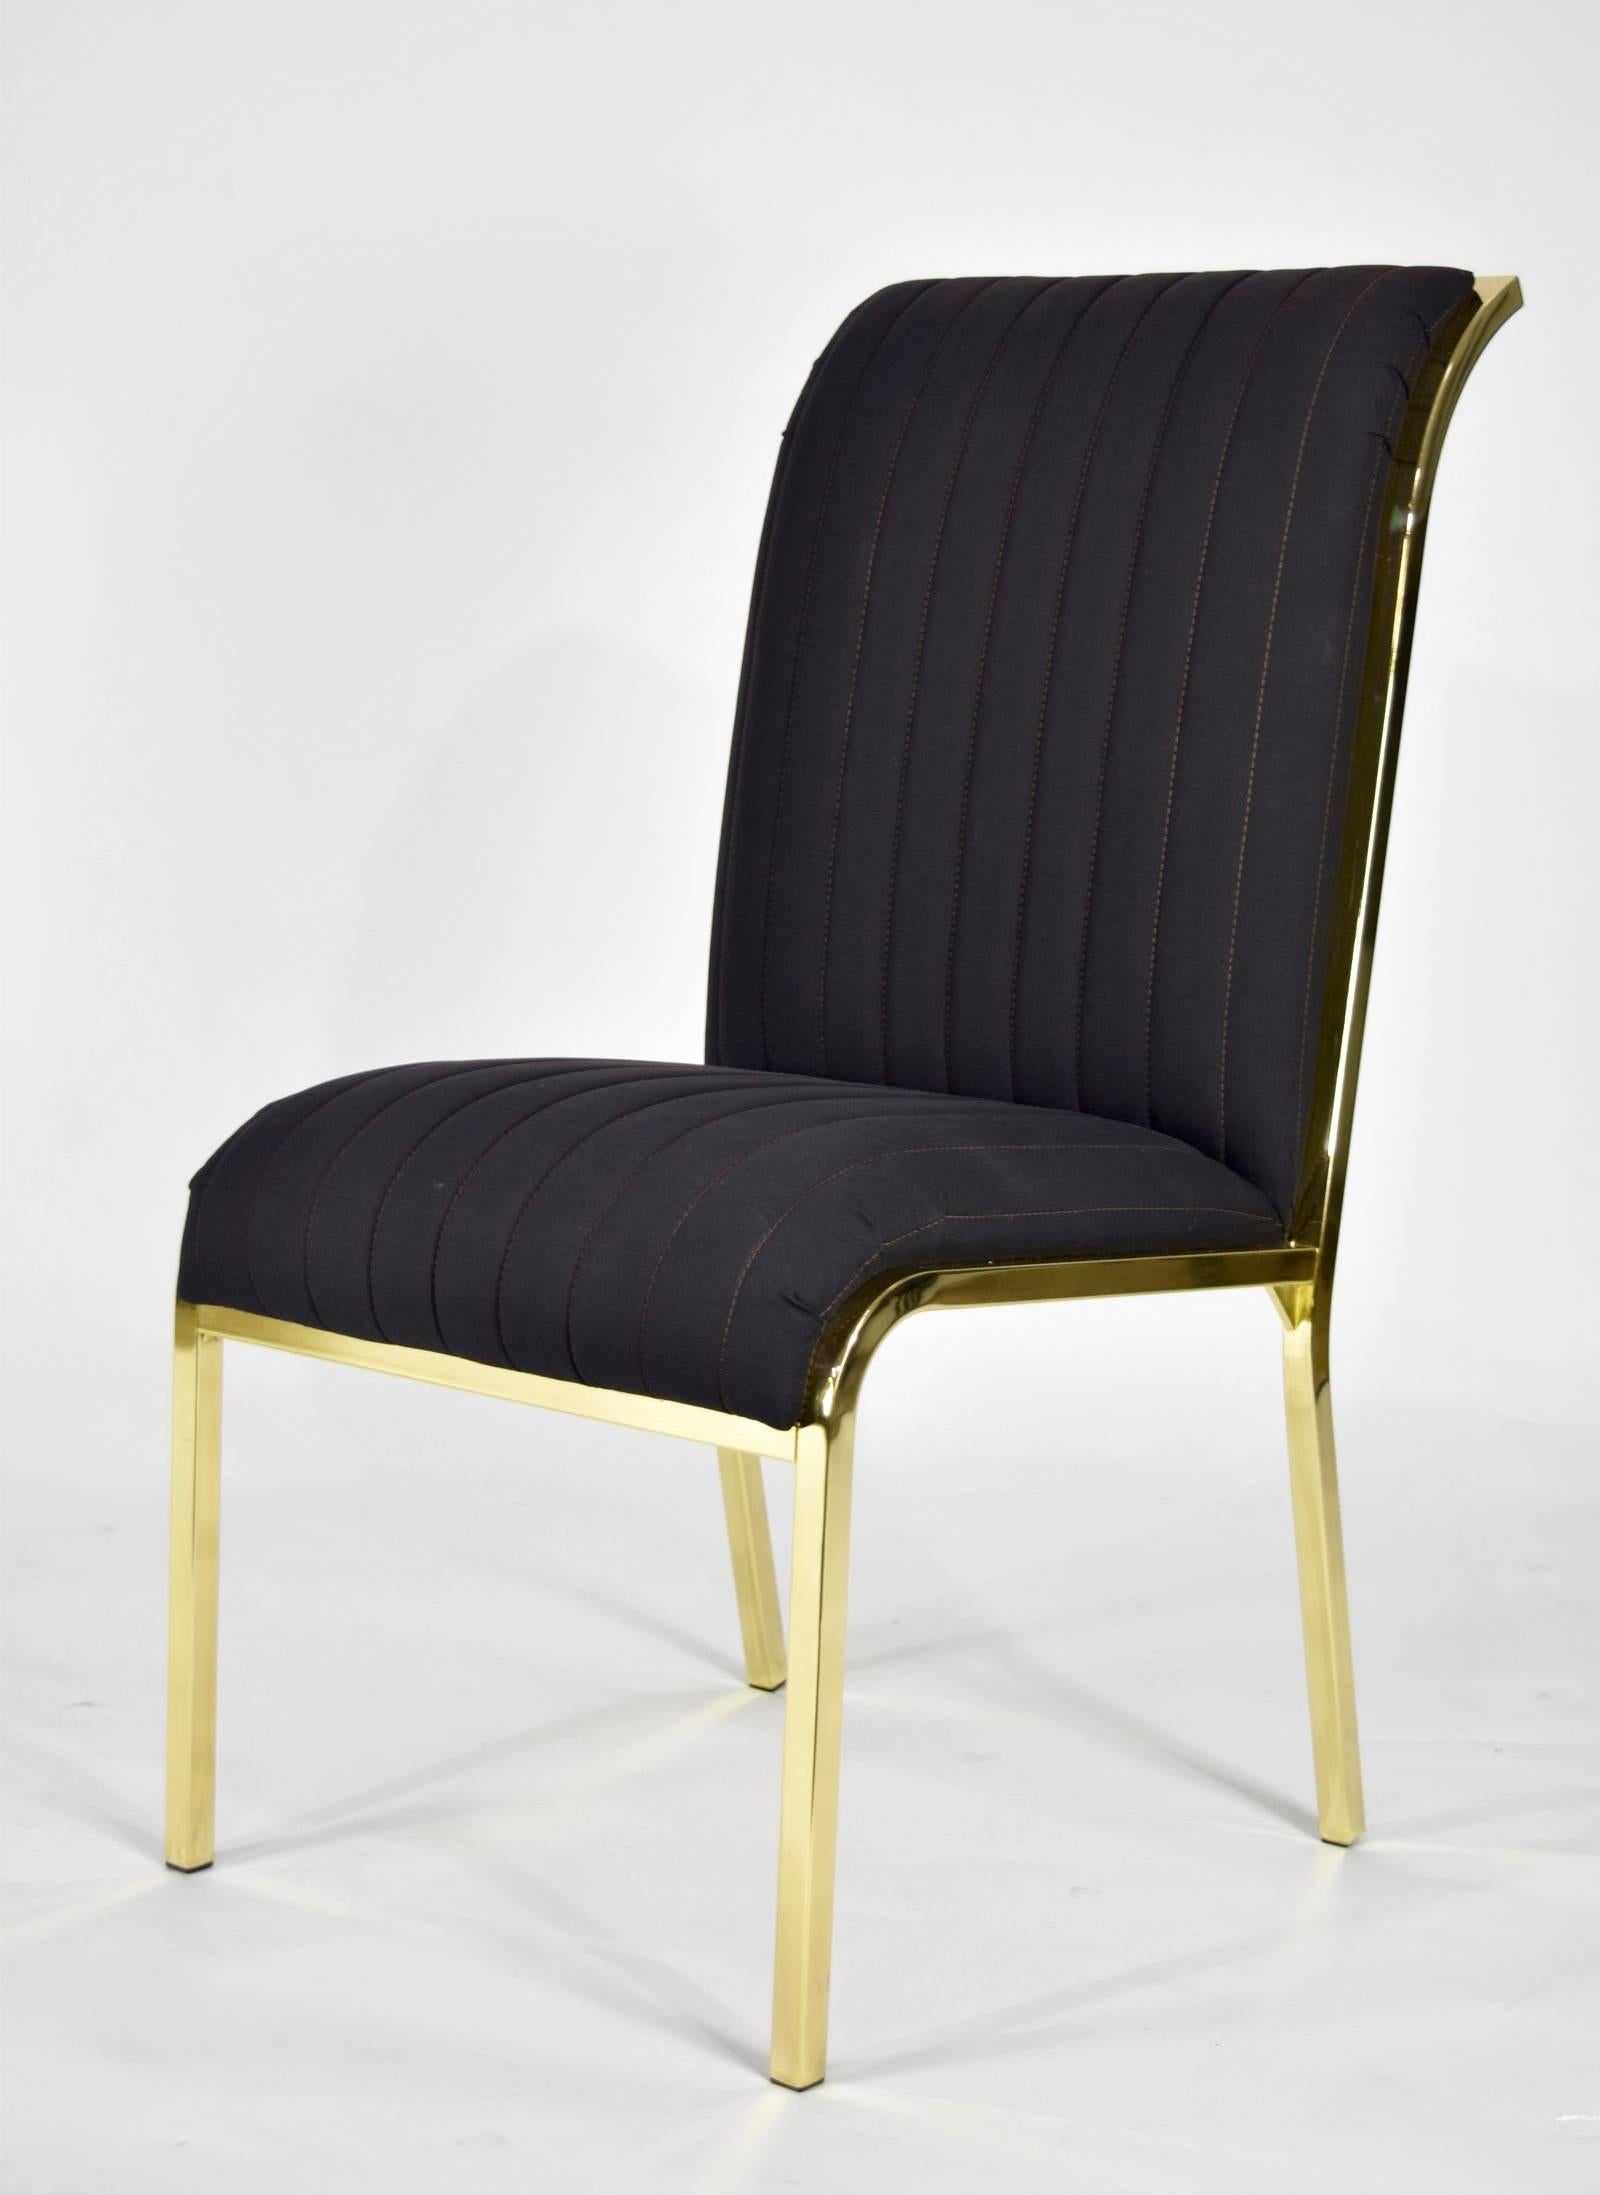 American Design Institute of America 'DIA' Dining Chairs in Brass Finish